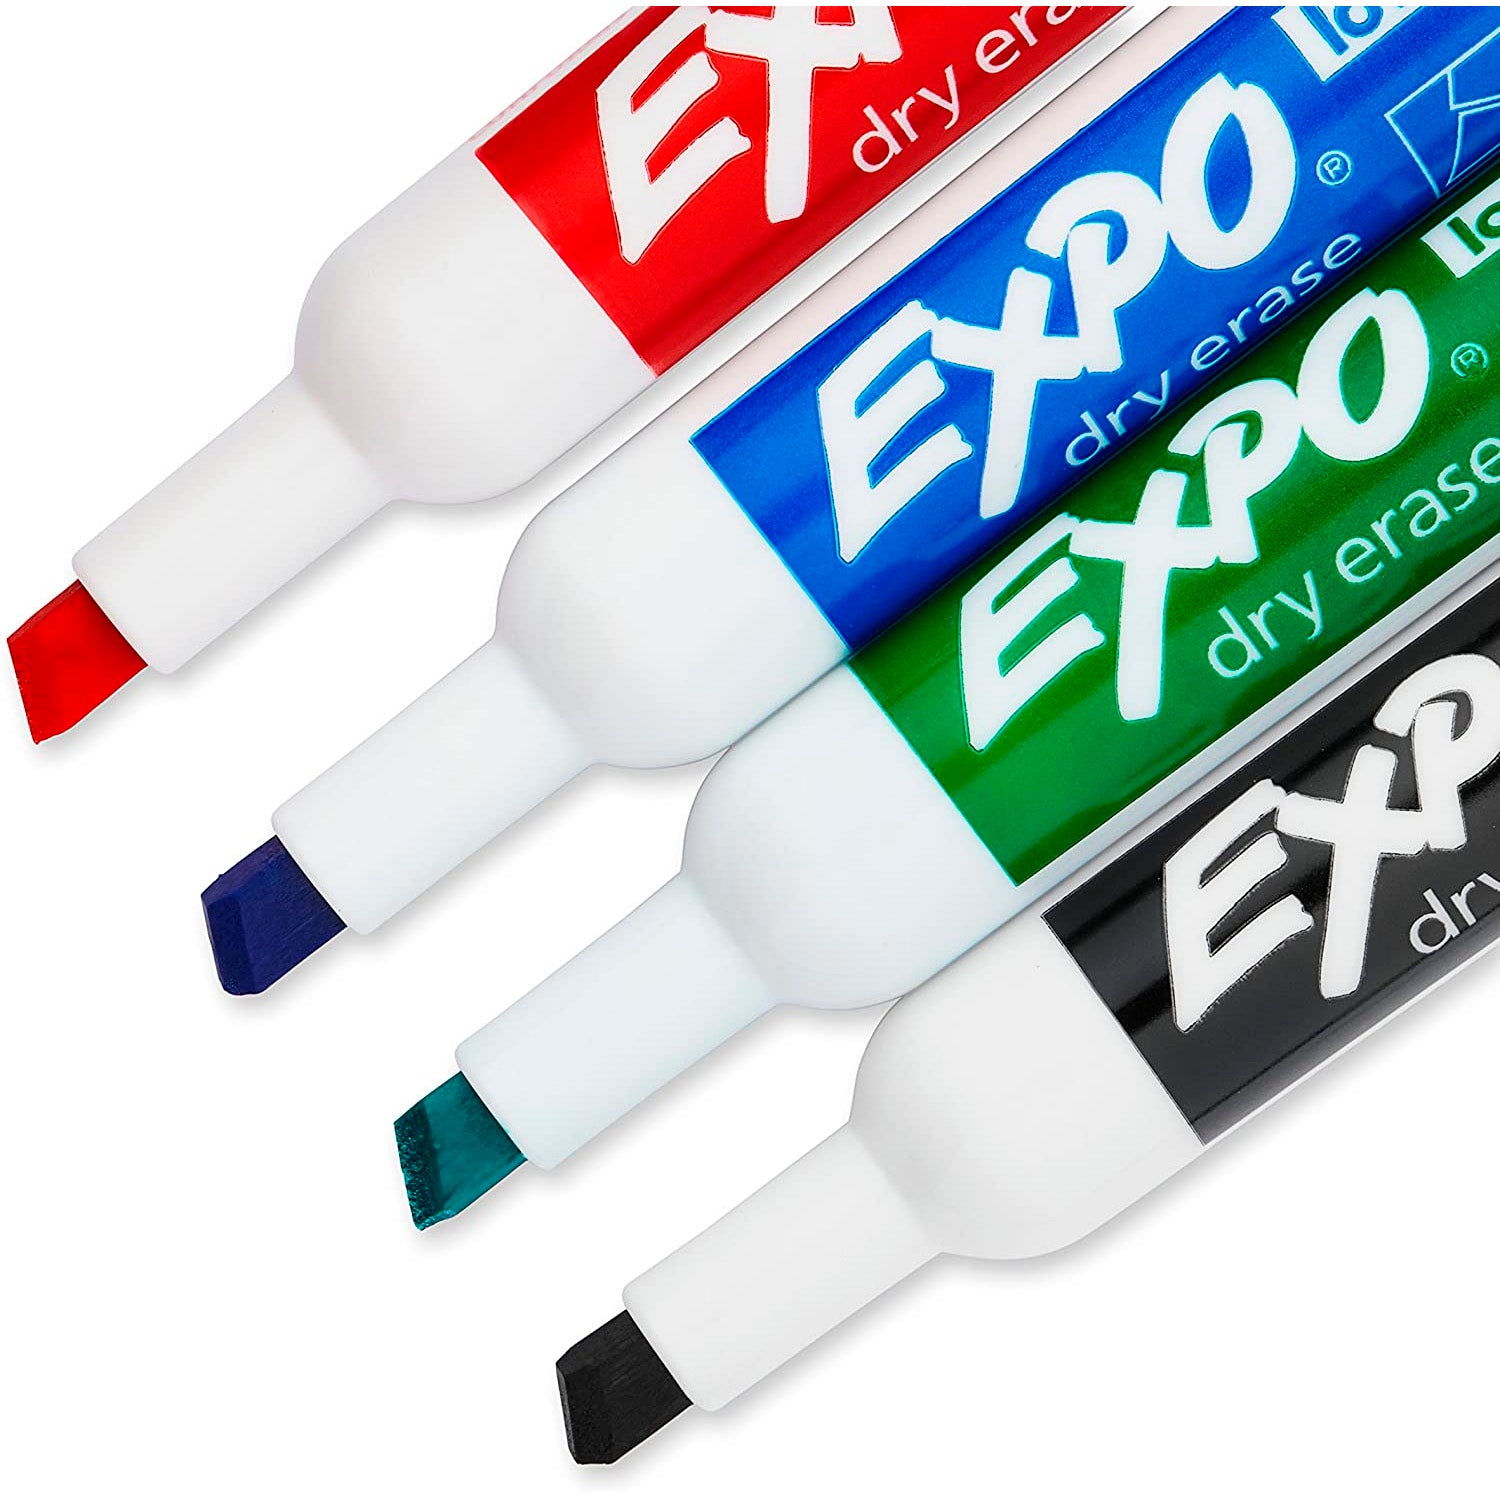 GREAT ERASE LOW Odor Dry Erase Marker, Fine Point, Assorted, 4-Count  (GDEP41ASST $13.12 - PicClick AU